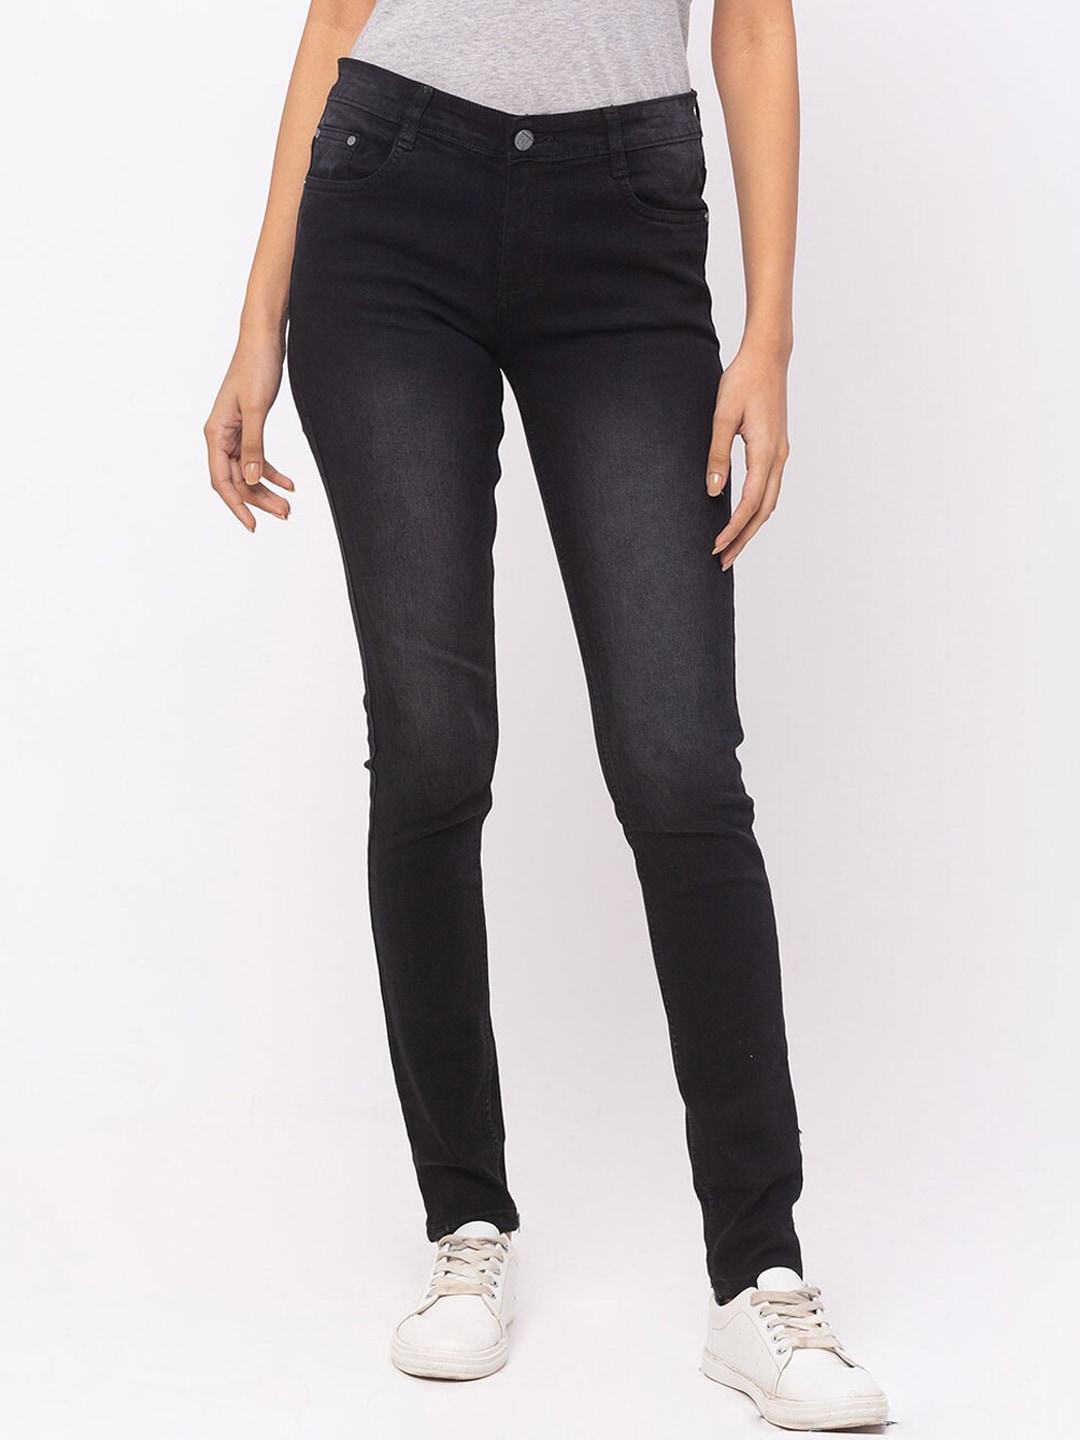 ZOLA Women Black Skinny Fit Light Fade Jeans Price in India